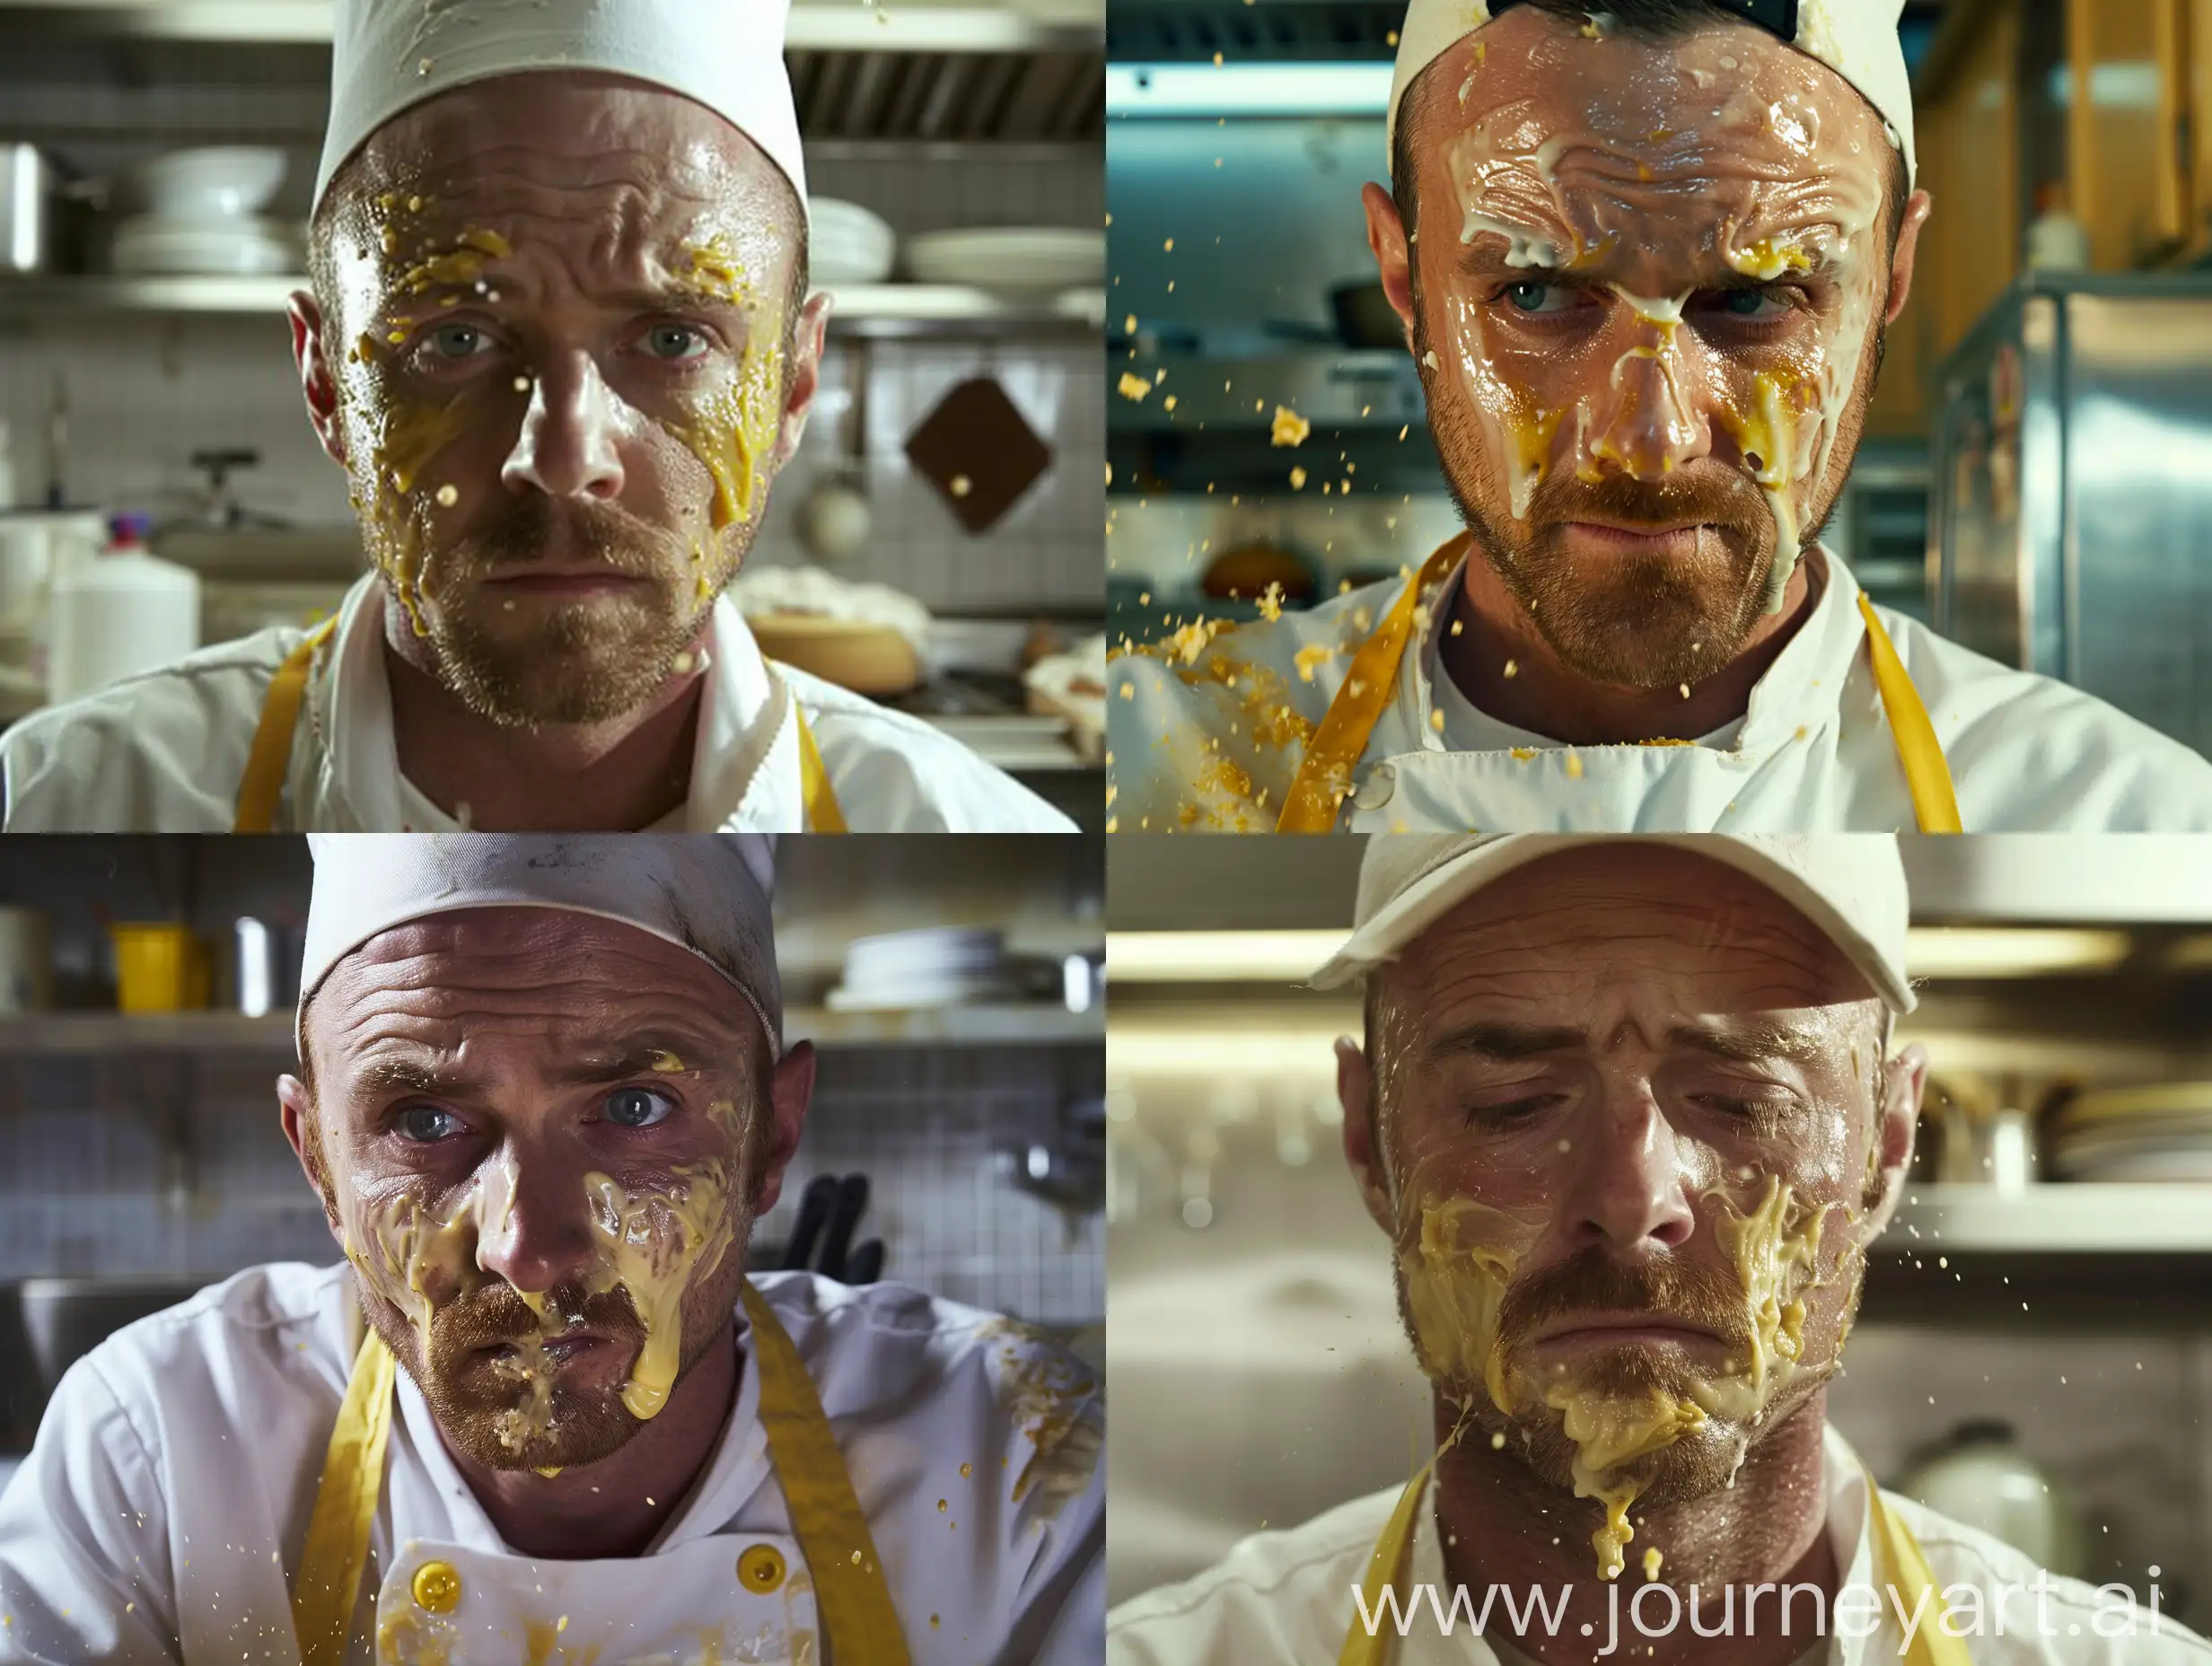 Jesse-Pinkman-Preparing-Cake-Batter-Kitchen-Mishap-Portrait